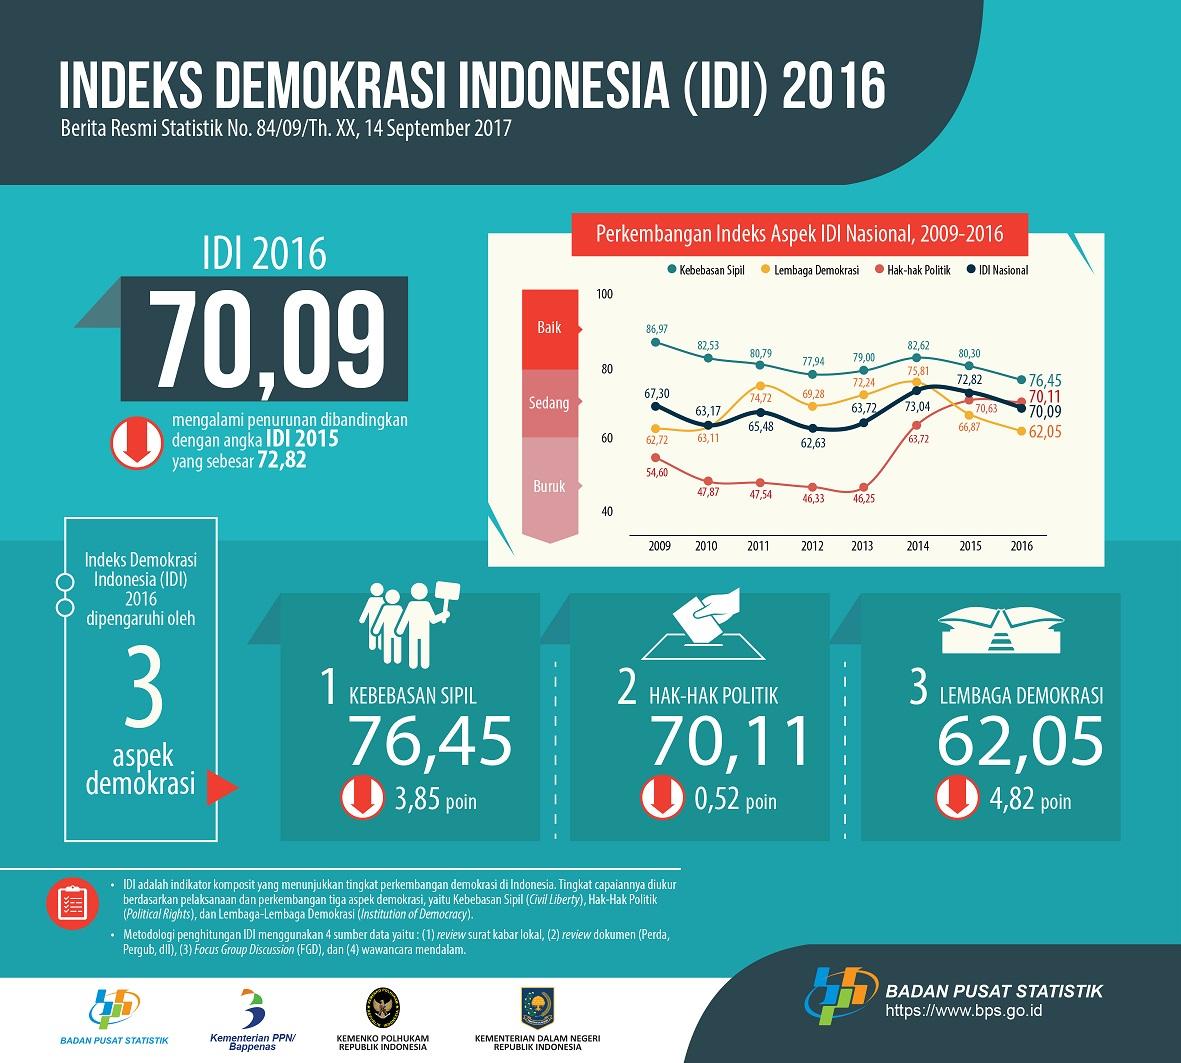 Indonesian Democracy Index (IDI) National 2016 Decreased Compared to 2015